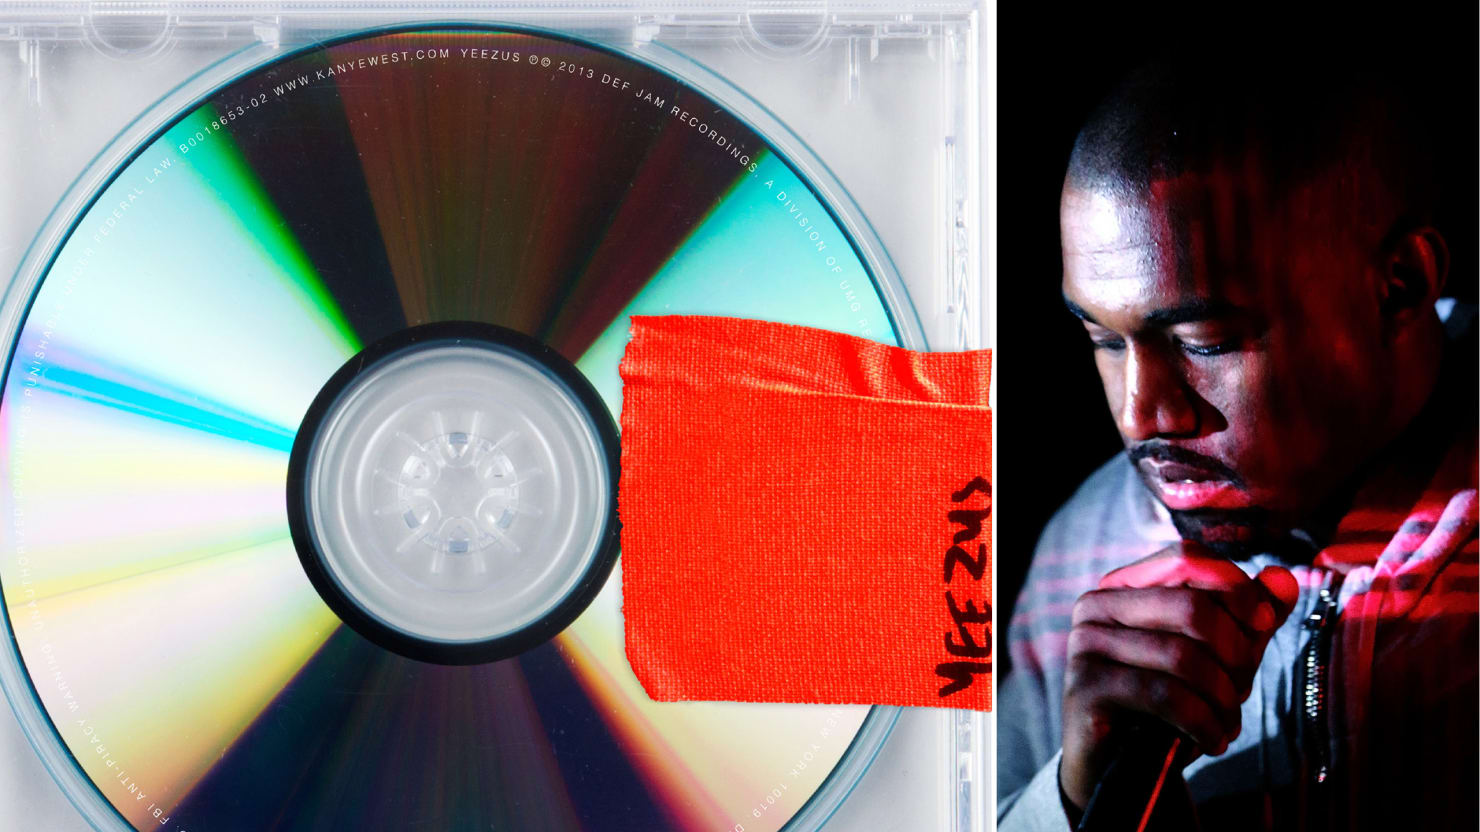 Praise ‘Yeezus’ Kanye West’s New Album is an Eclectic Tour de Force